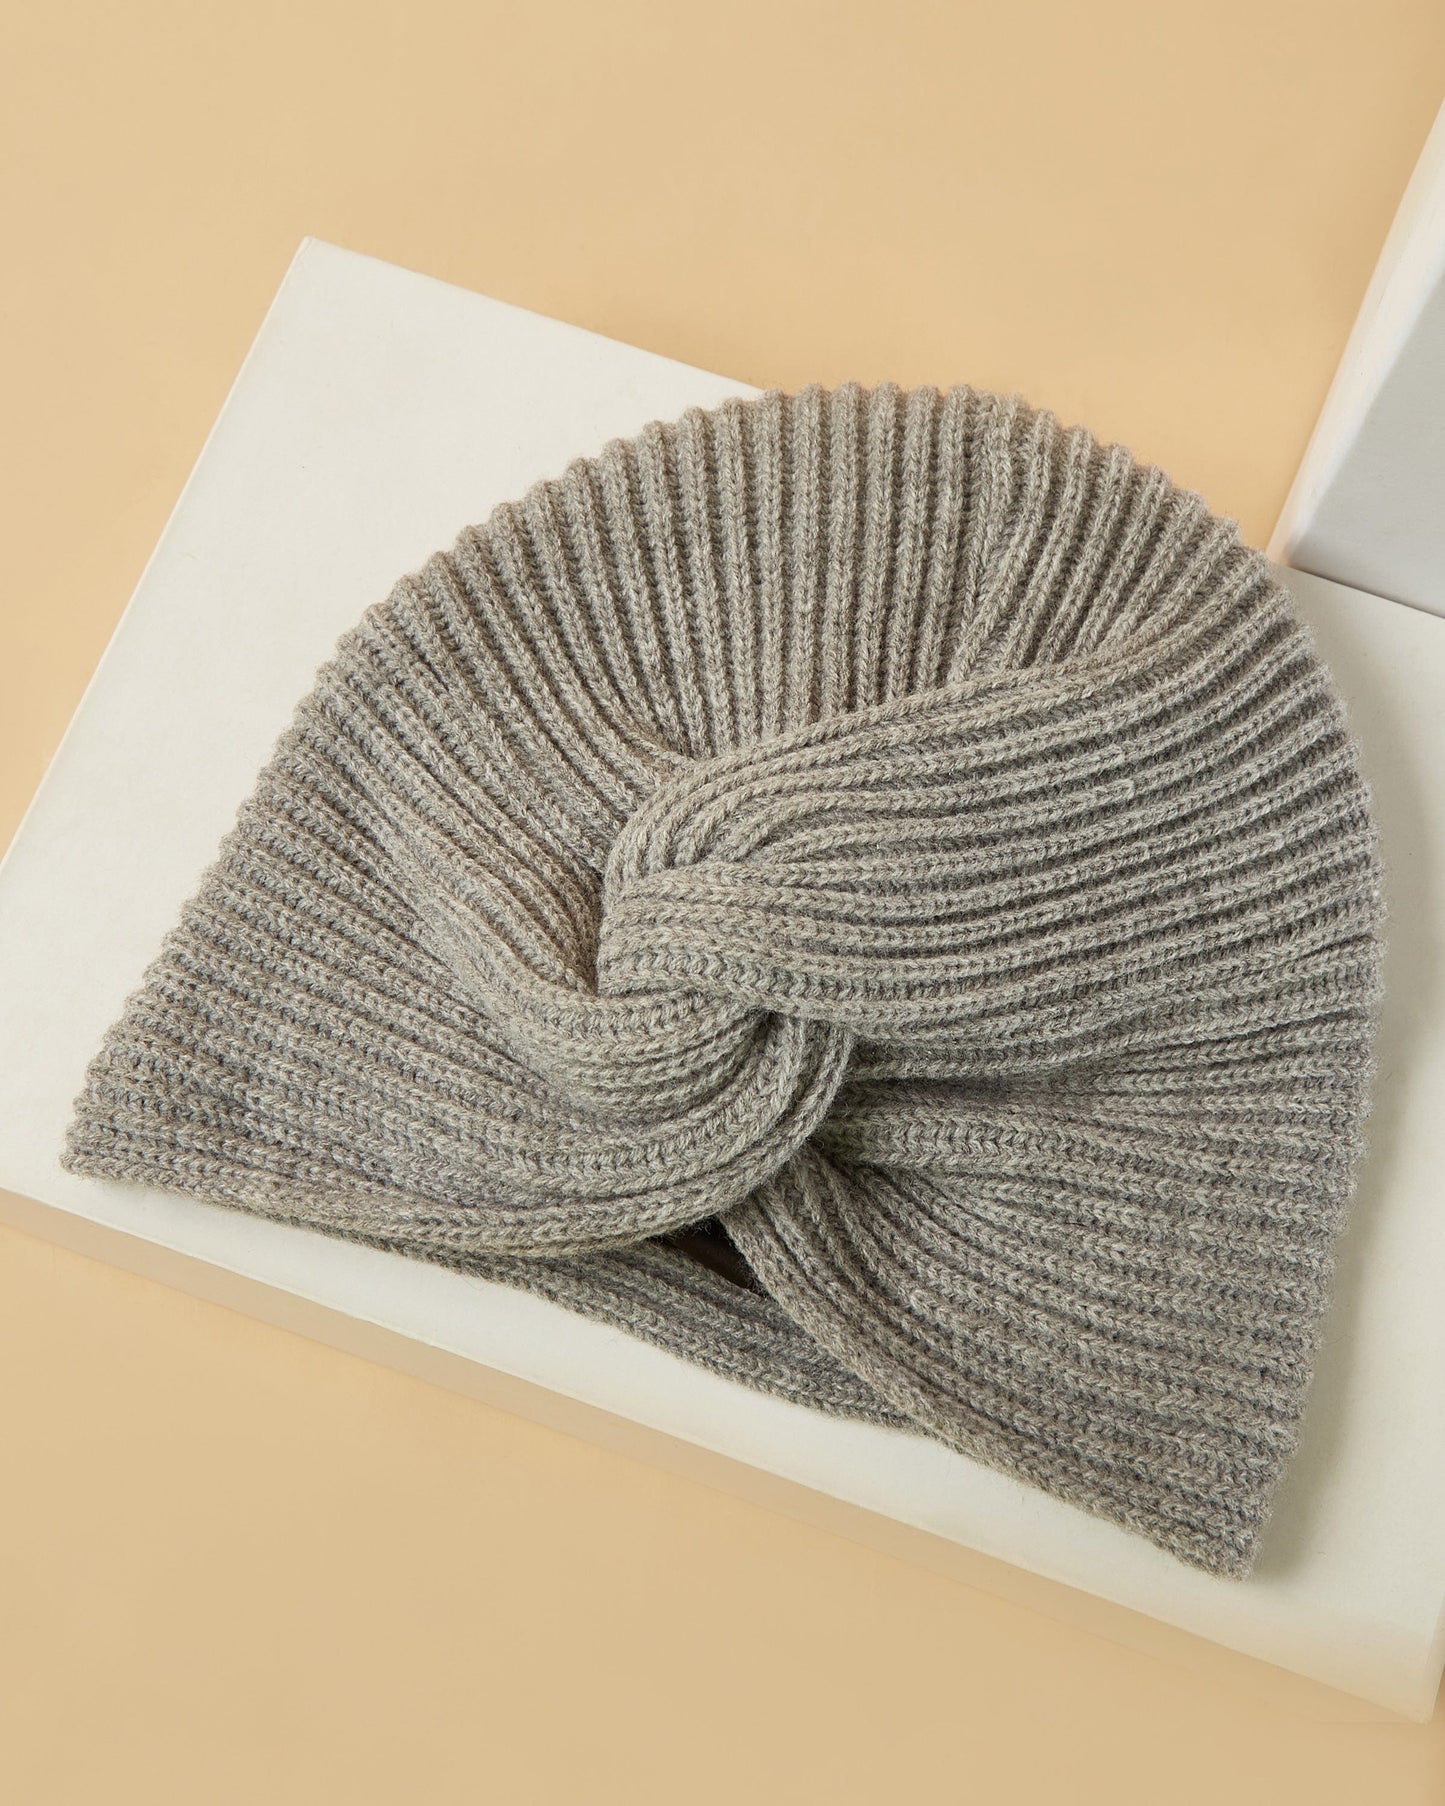 The Wrap Life Satin Lined Winter Turban in Pewter Grey Turban